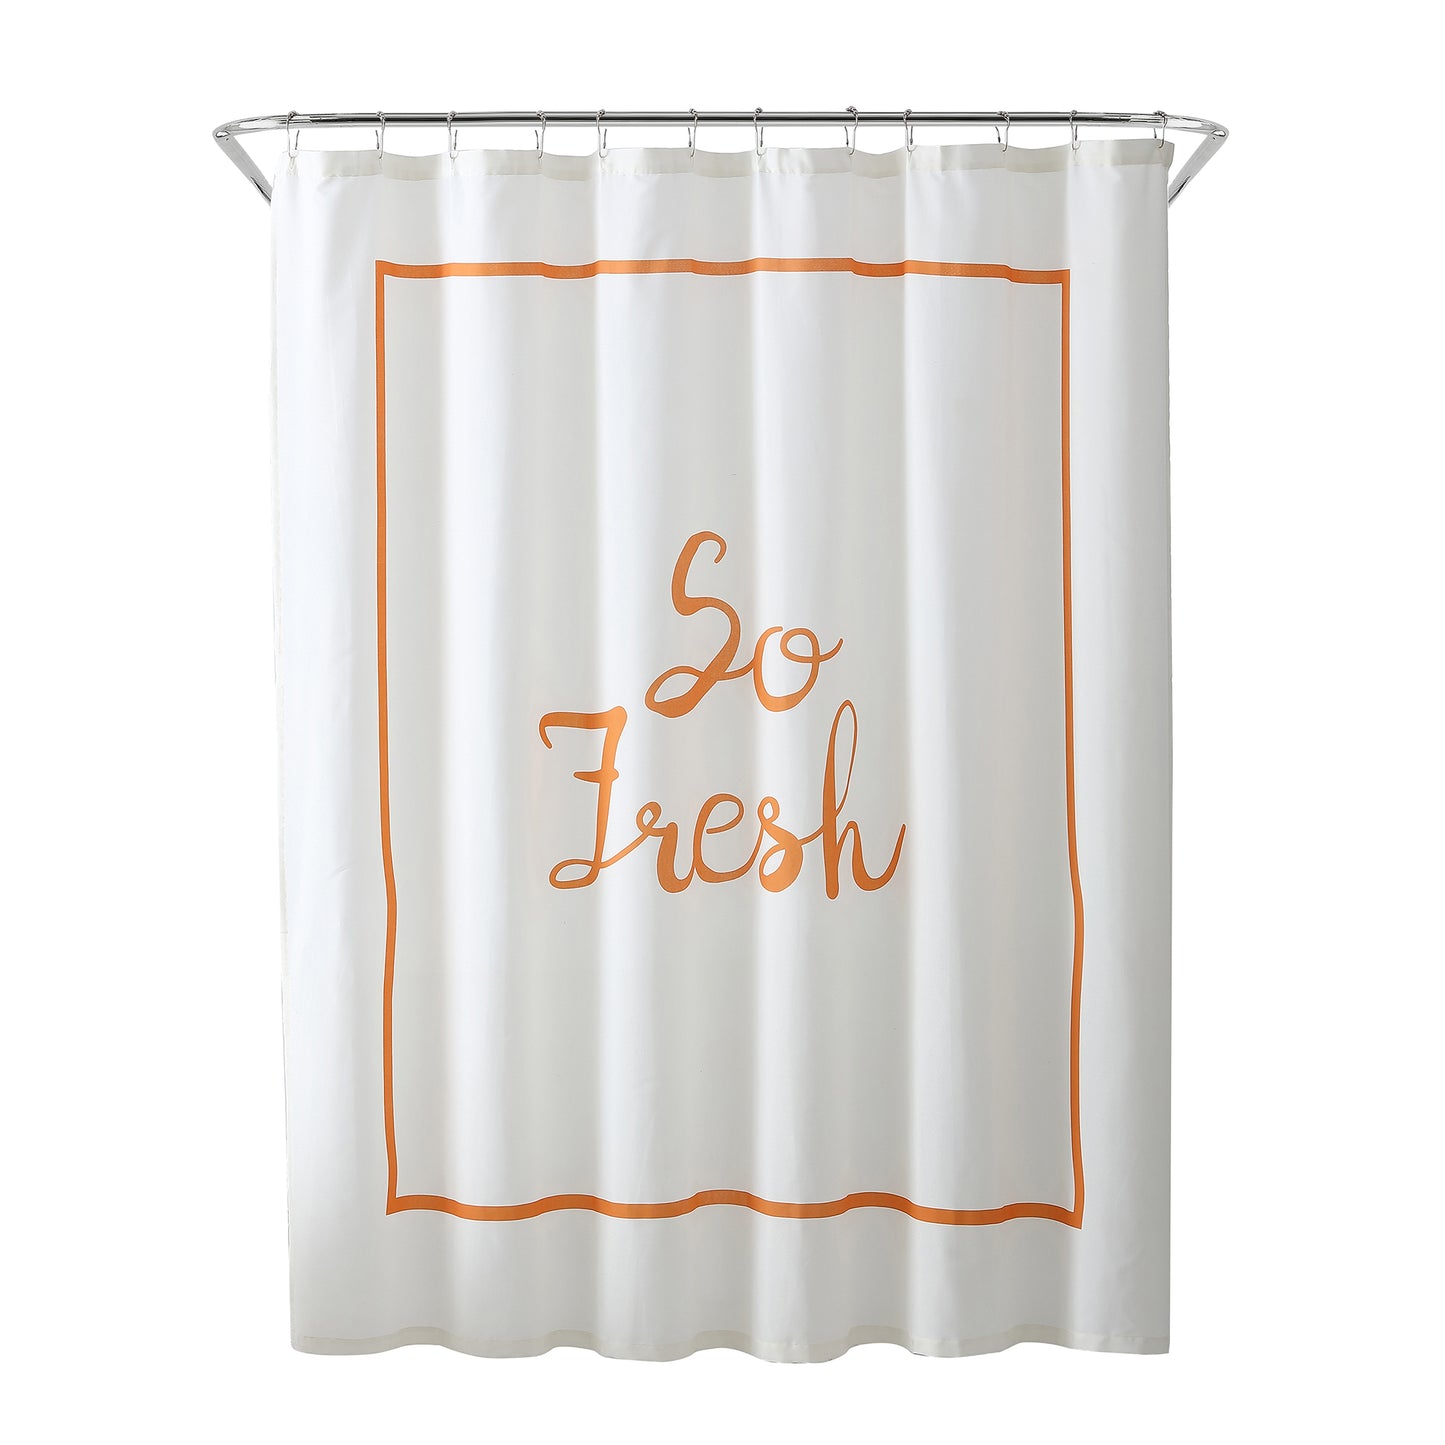 Freshee Shower Curtain - So Fresh